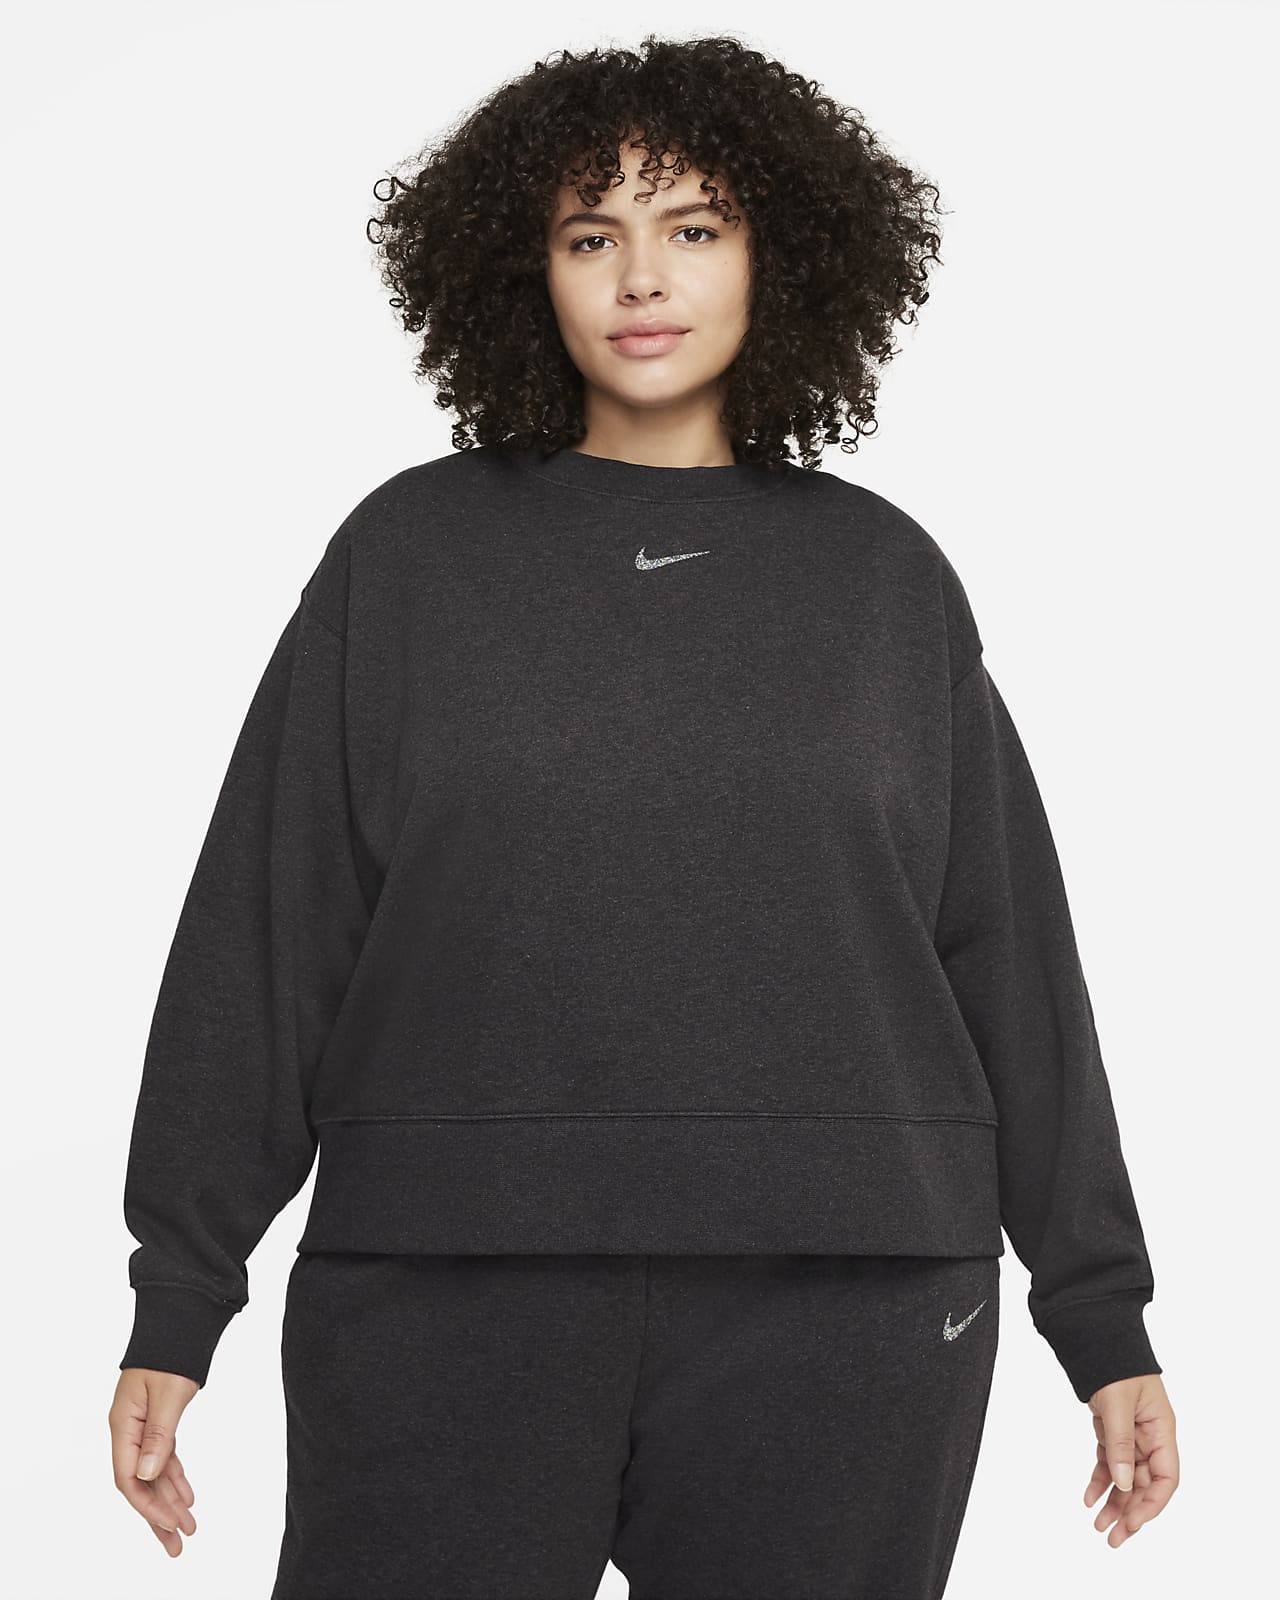 Haut oversize en tissu Fleece Nike Sportswear Collection Essentials pour Femme (grande taille)